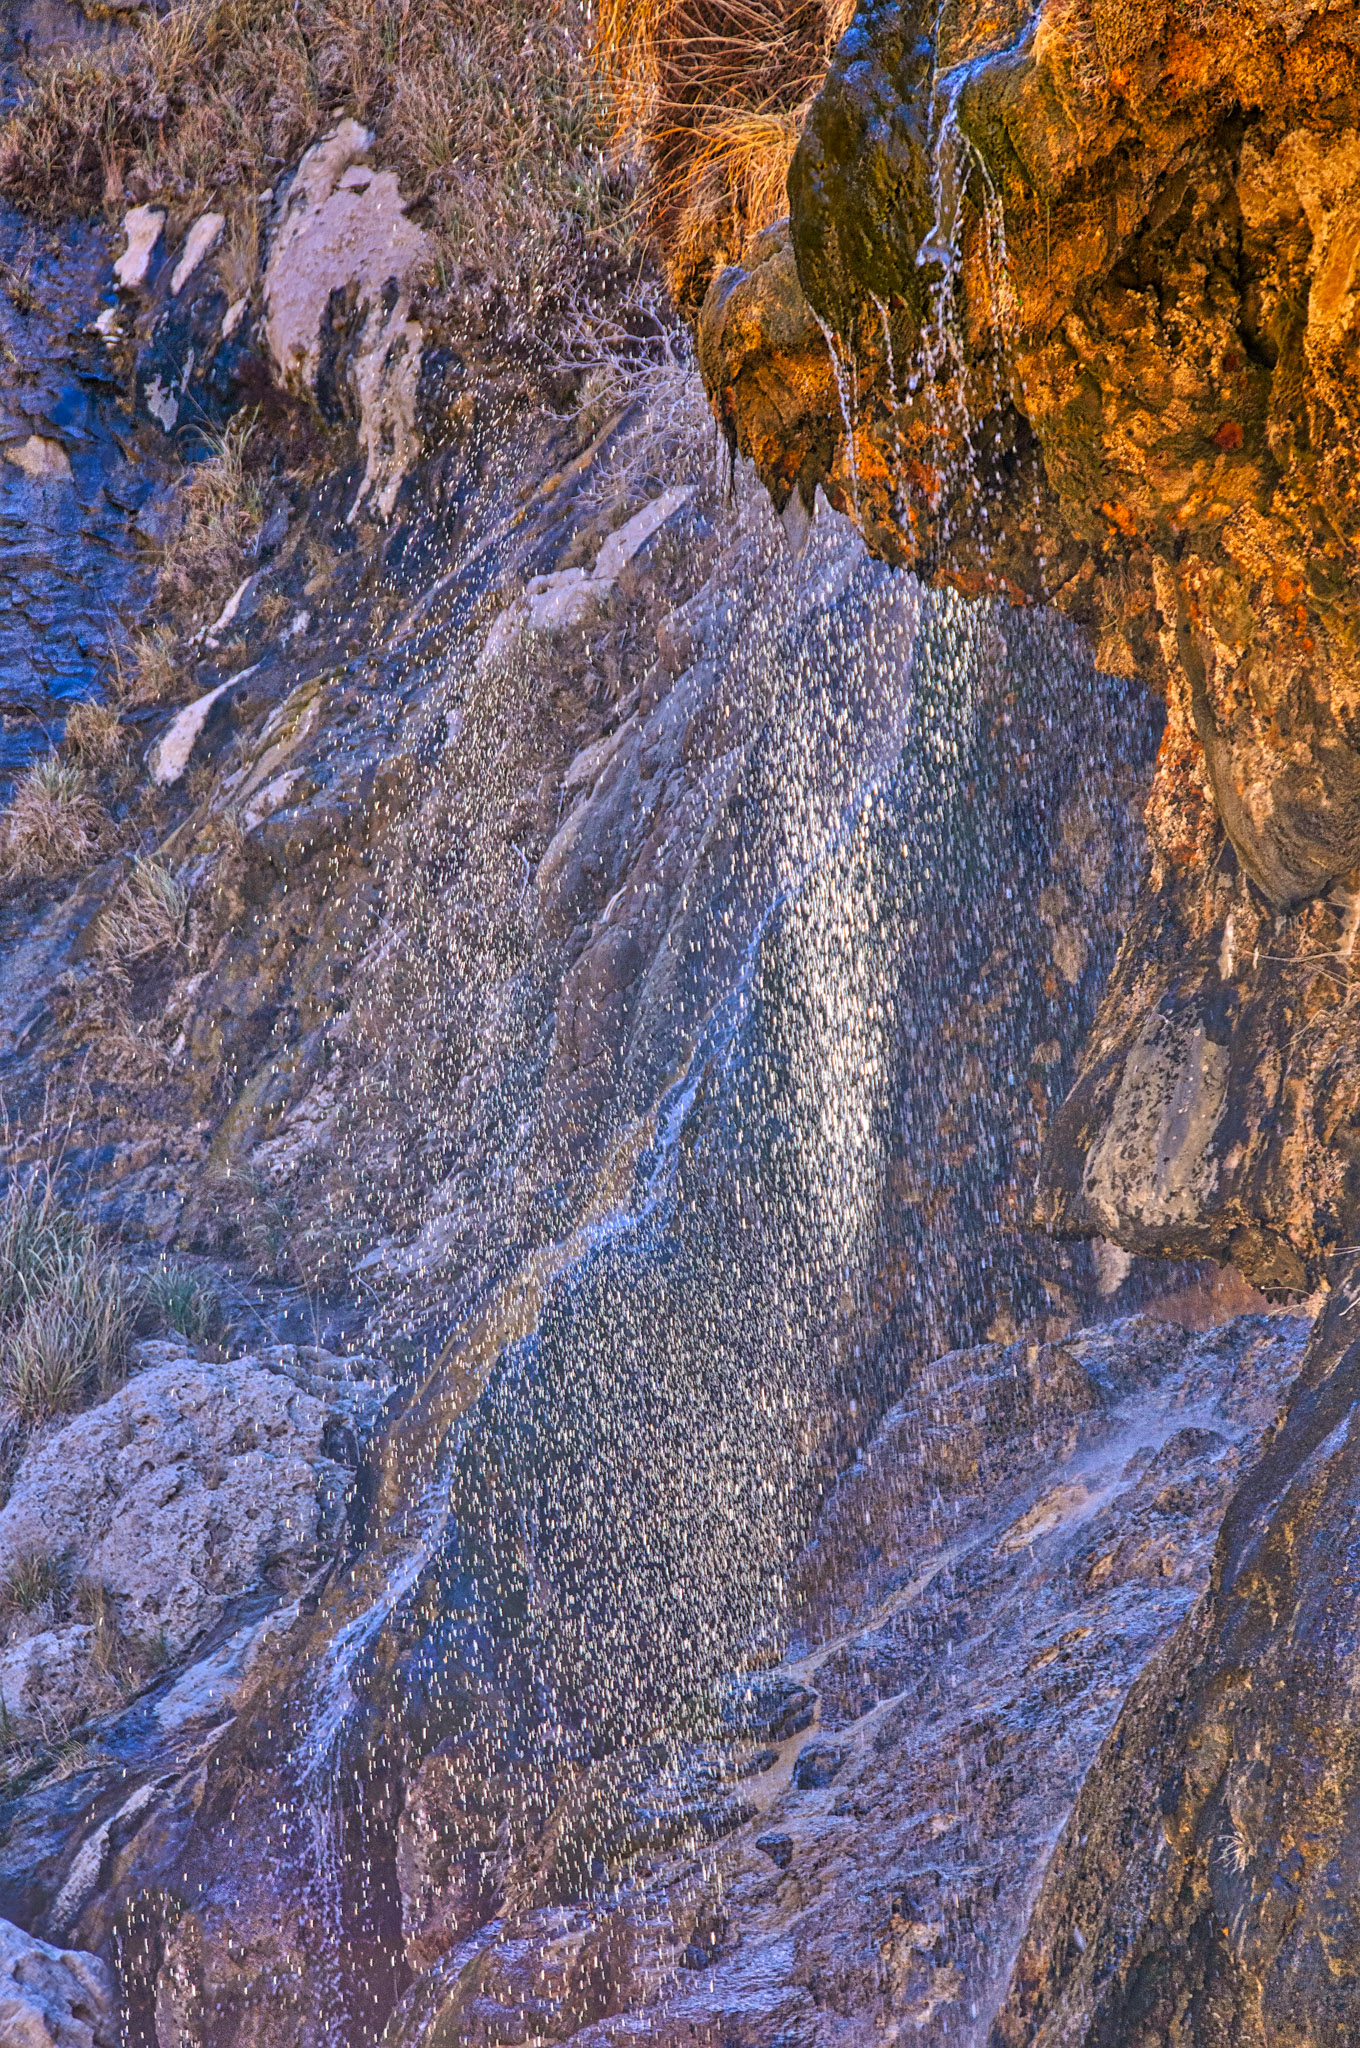 Sitting Bull Falls in Sitting Bull Falls Recreation Area near Carlsbad, New Mexico.